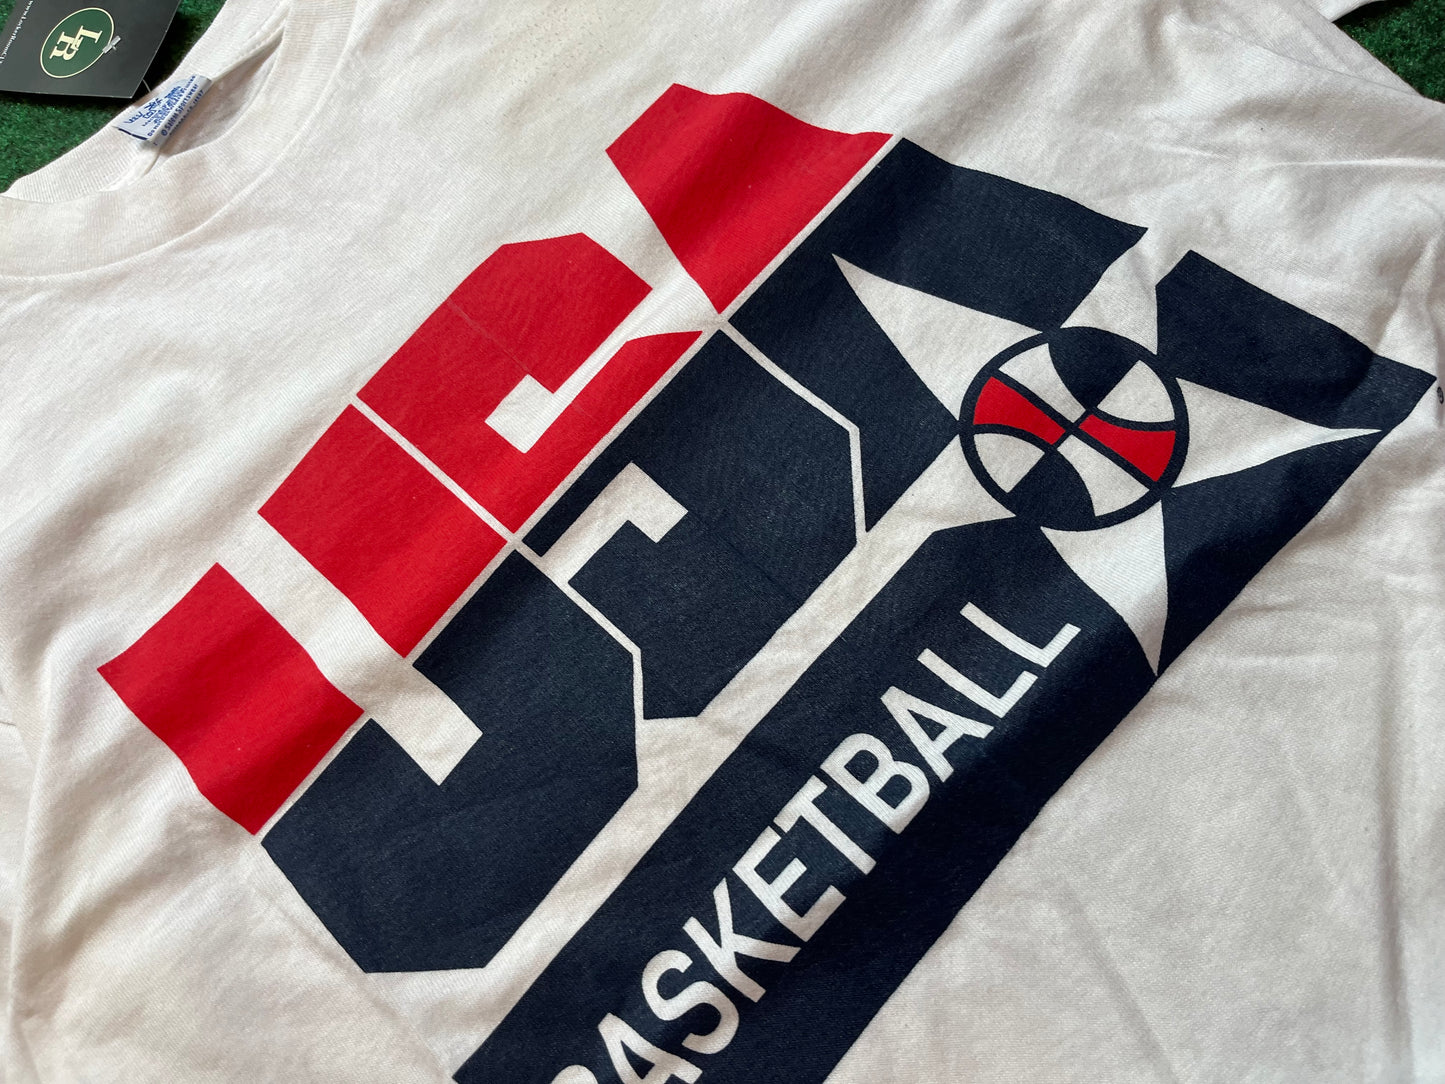 1991 USA Basketball Salem Sportswear Shirt (Large)